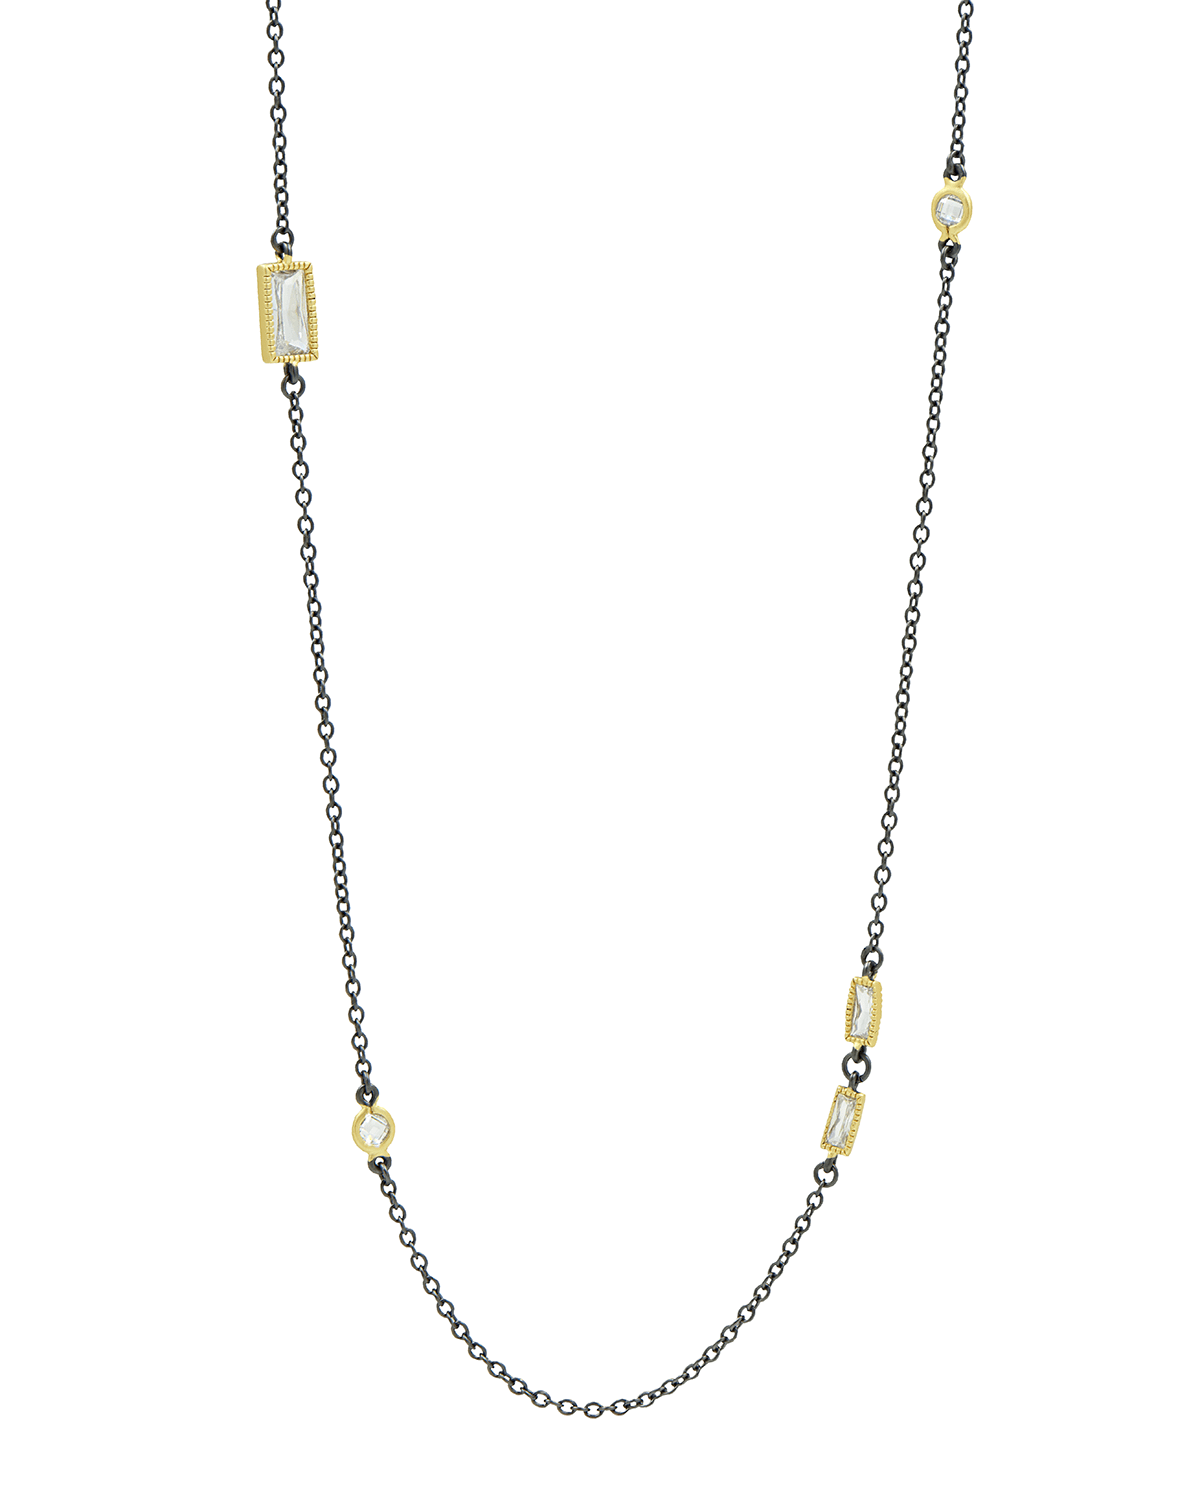 Freida Rothman Long Cubic Zirconia Necklace, 36"L